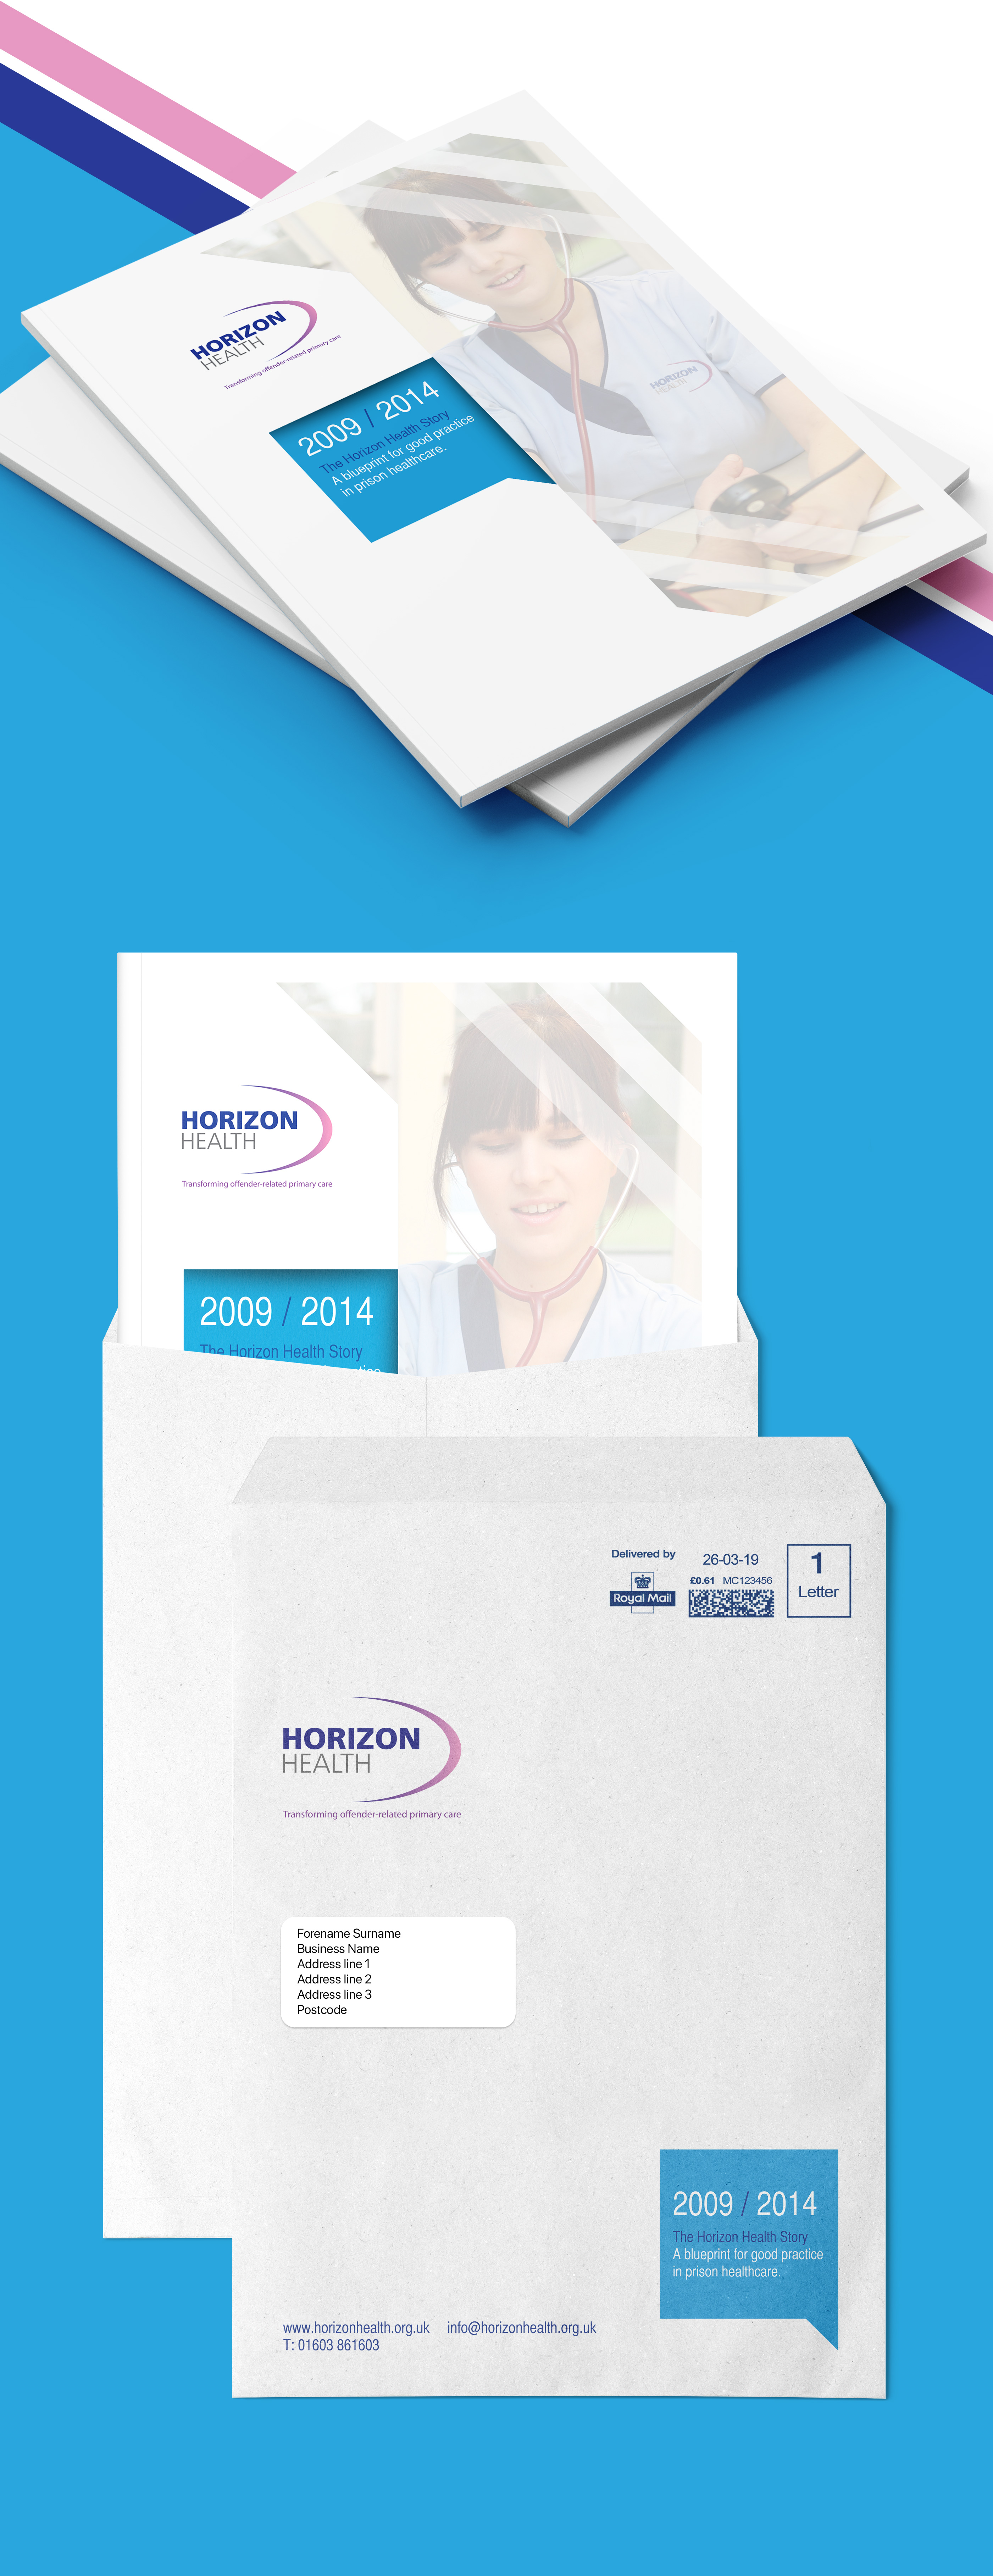 Horizon Health print design and brand management